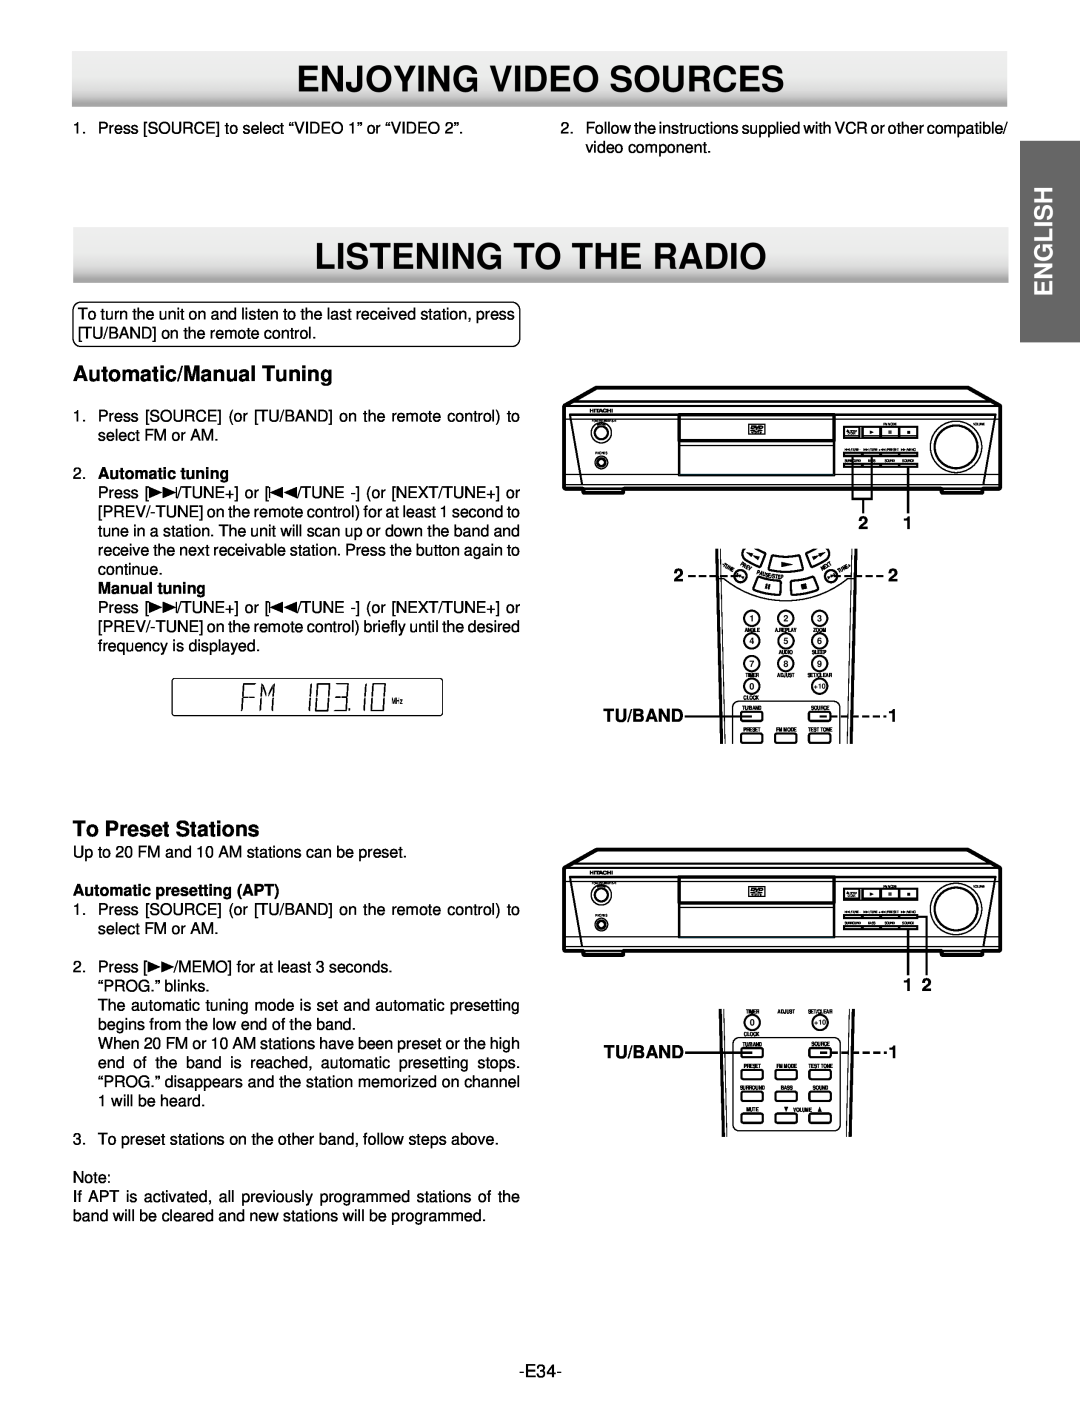 Hitachi DV-S522U Enjoying Video Sources, Listening To The Radio, Automatic/Manual Tuning, To Preset Stations, English 